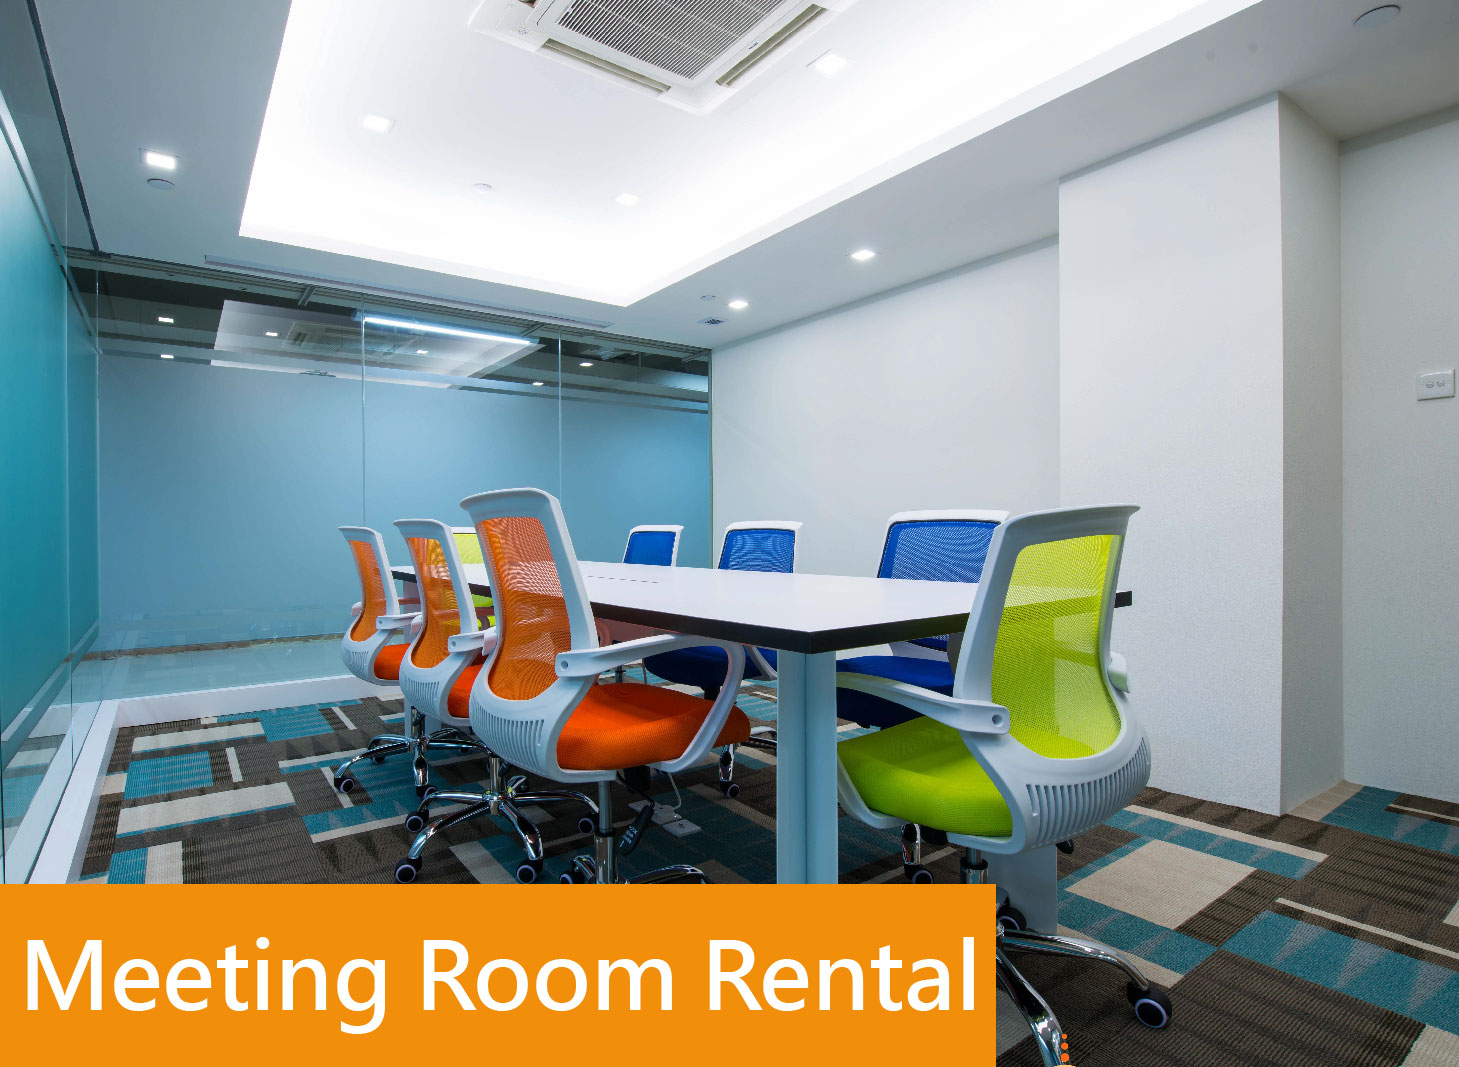 壹達商務中心, business centre, Meeting Room Rental